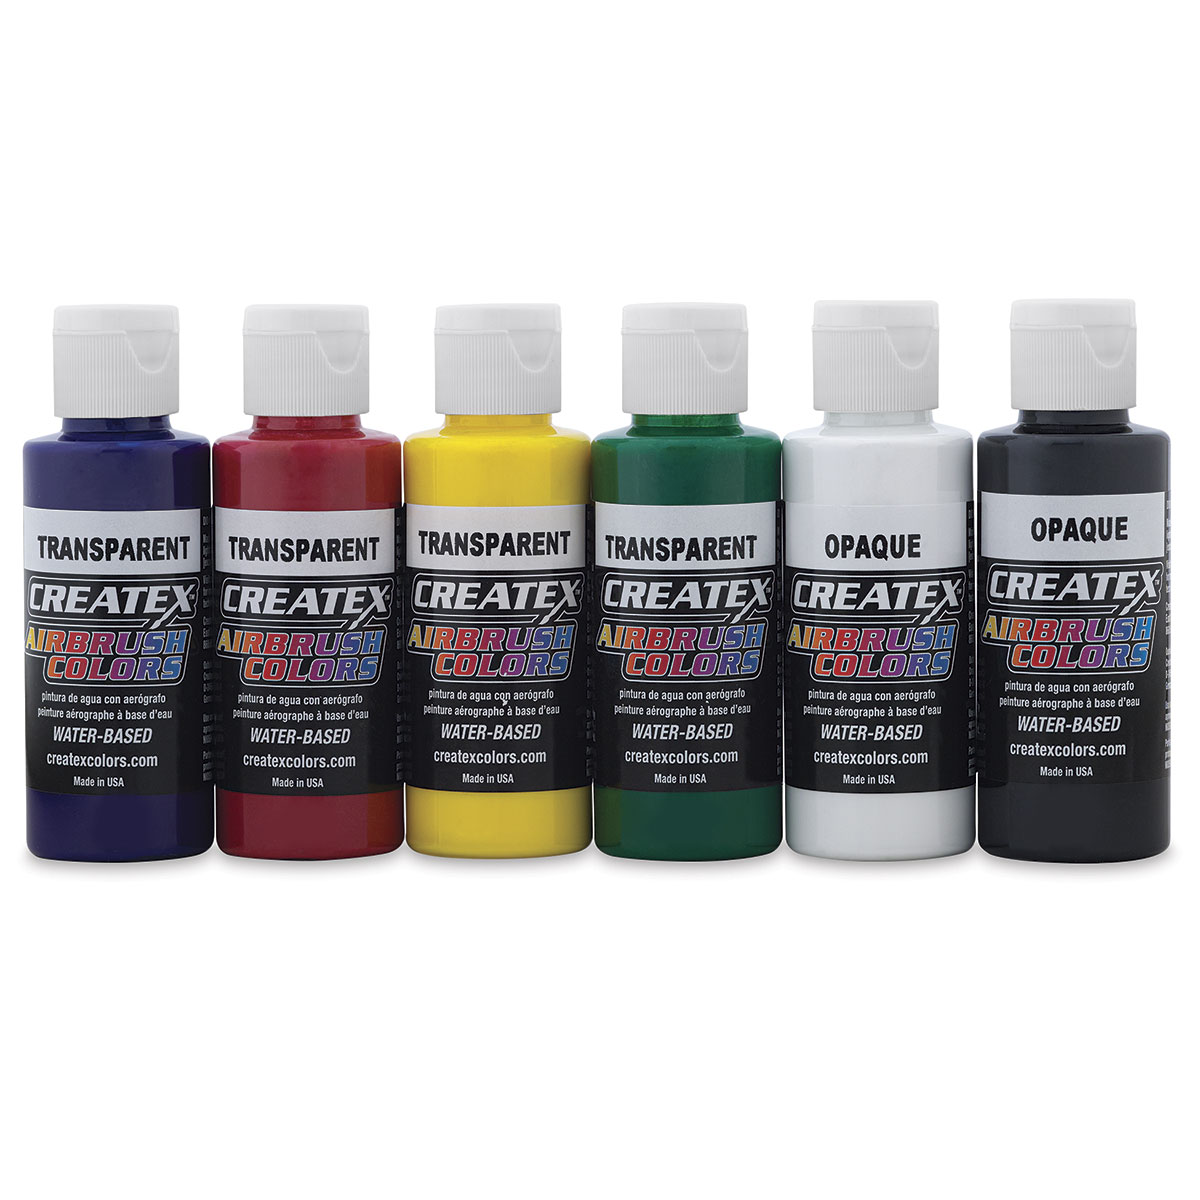 Createx Airbrush Colors Transparent 16 oz Light Brown